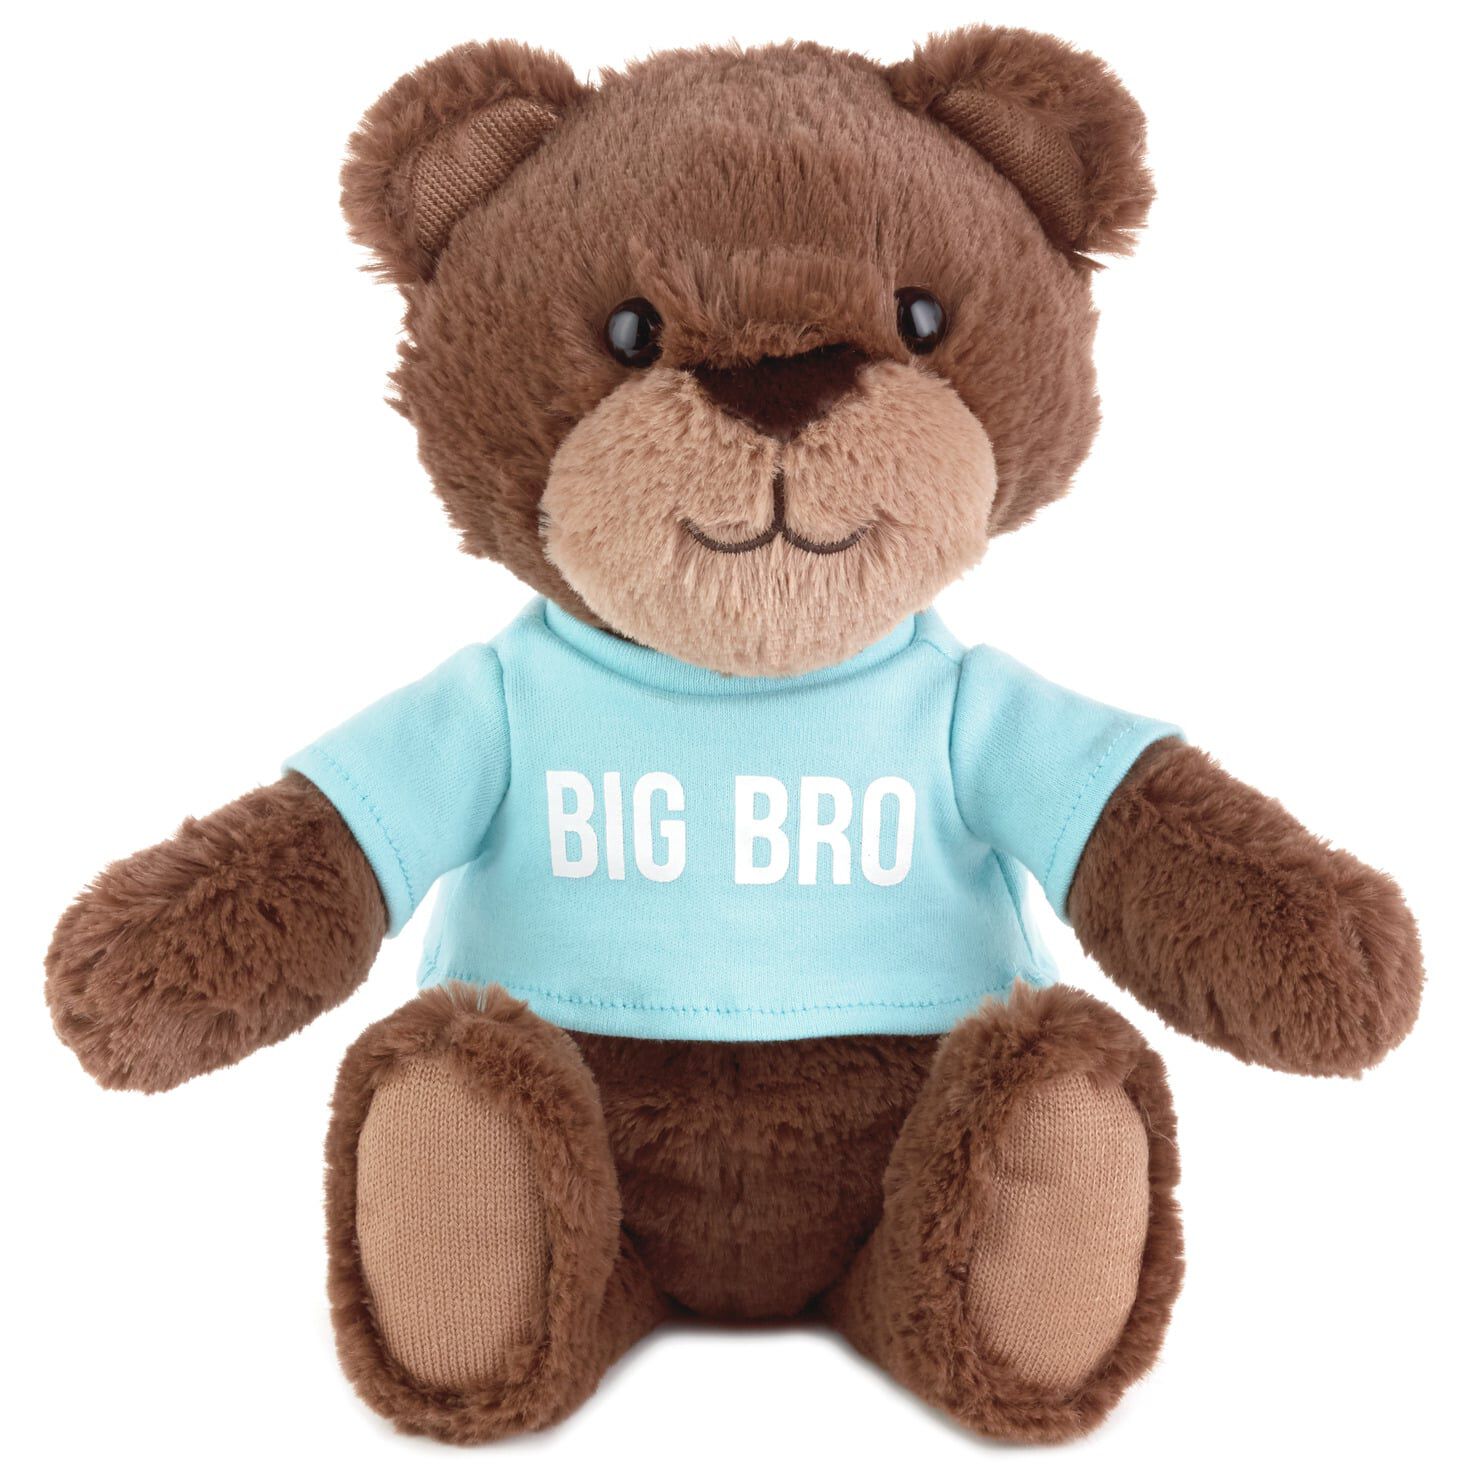 Big Bro Teddy Bear Stuffed Animal, 9 